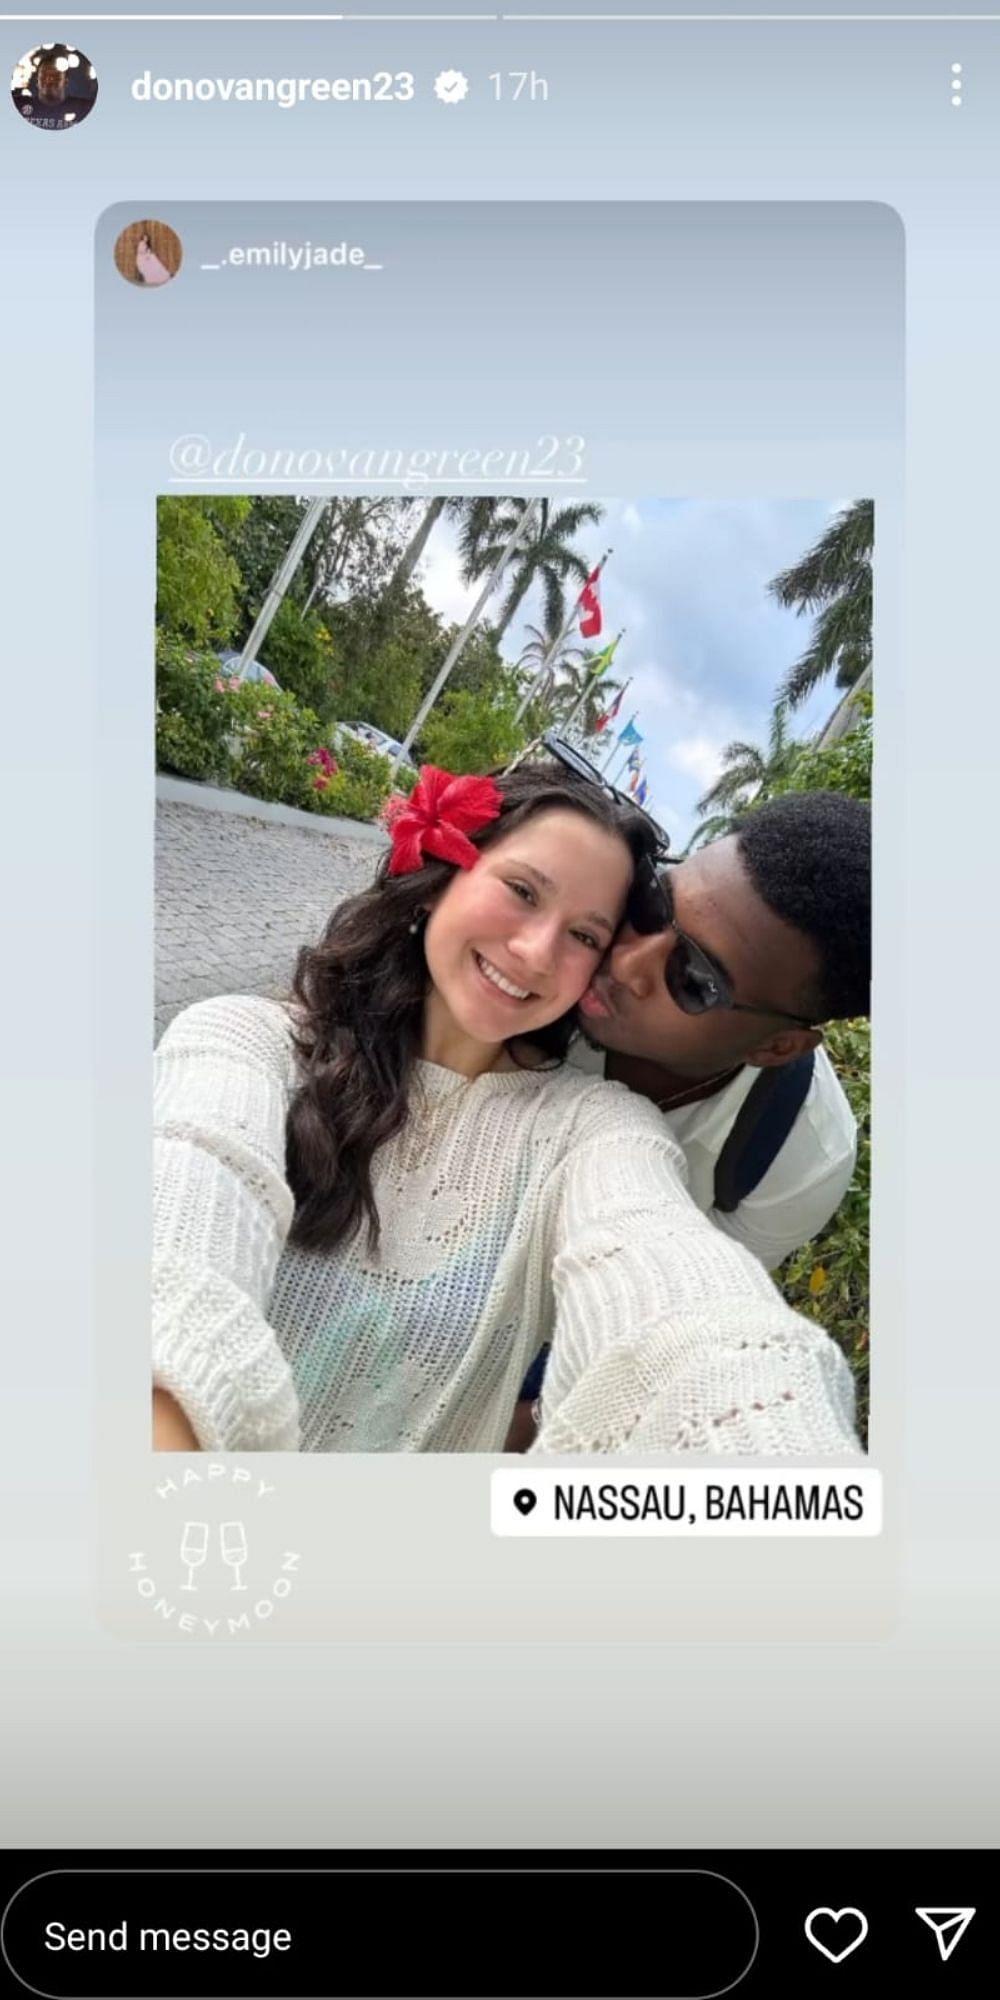 Donovan Green and Emily Jade on their honeymoon.